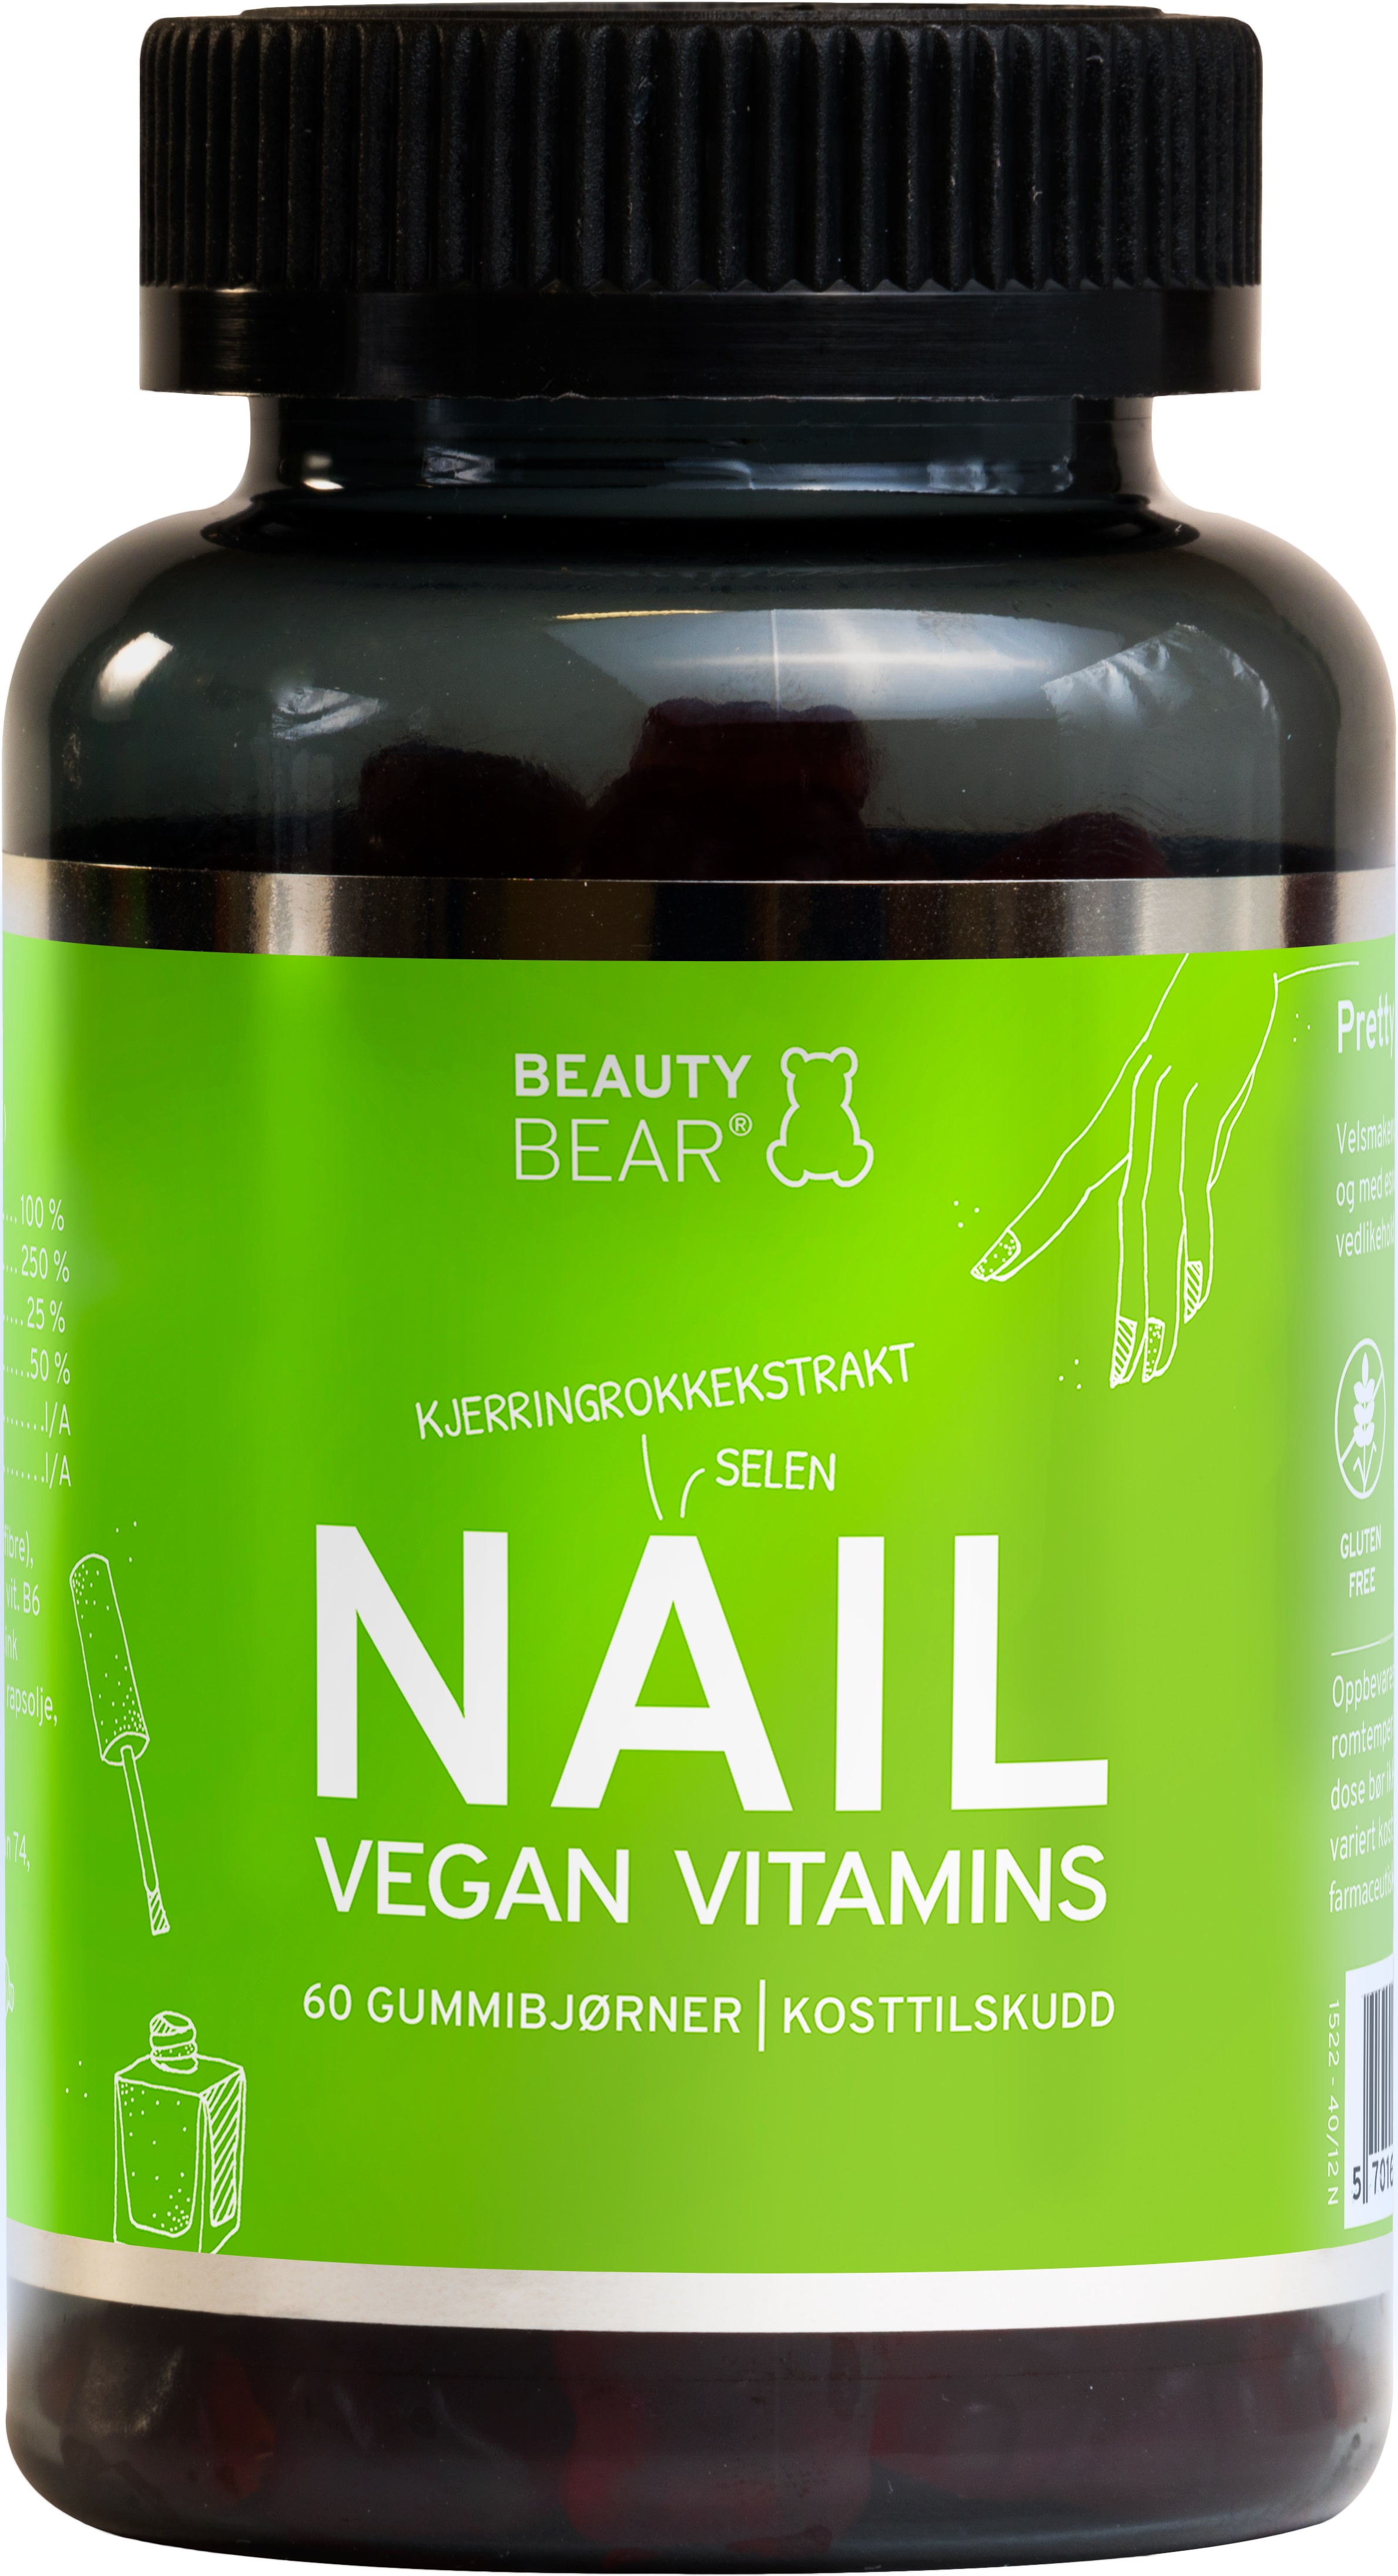 Beauty Bear Nail Vegan Vitamins tyggetab, 60 stk.